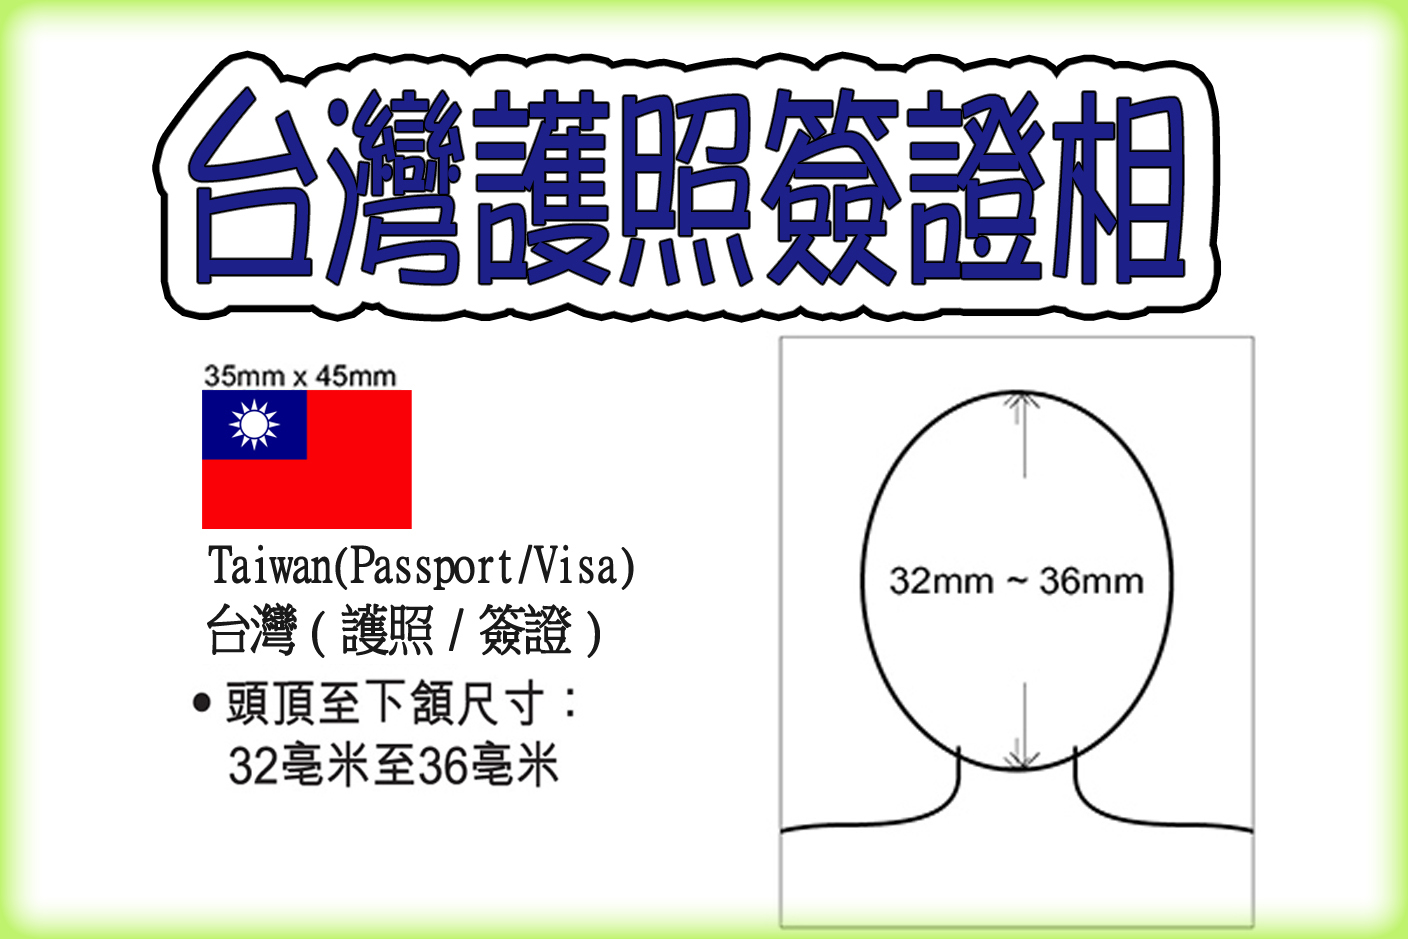 Taiwan Passport/Visa